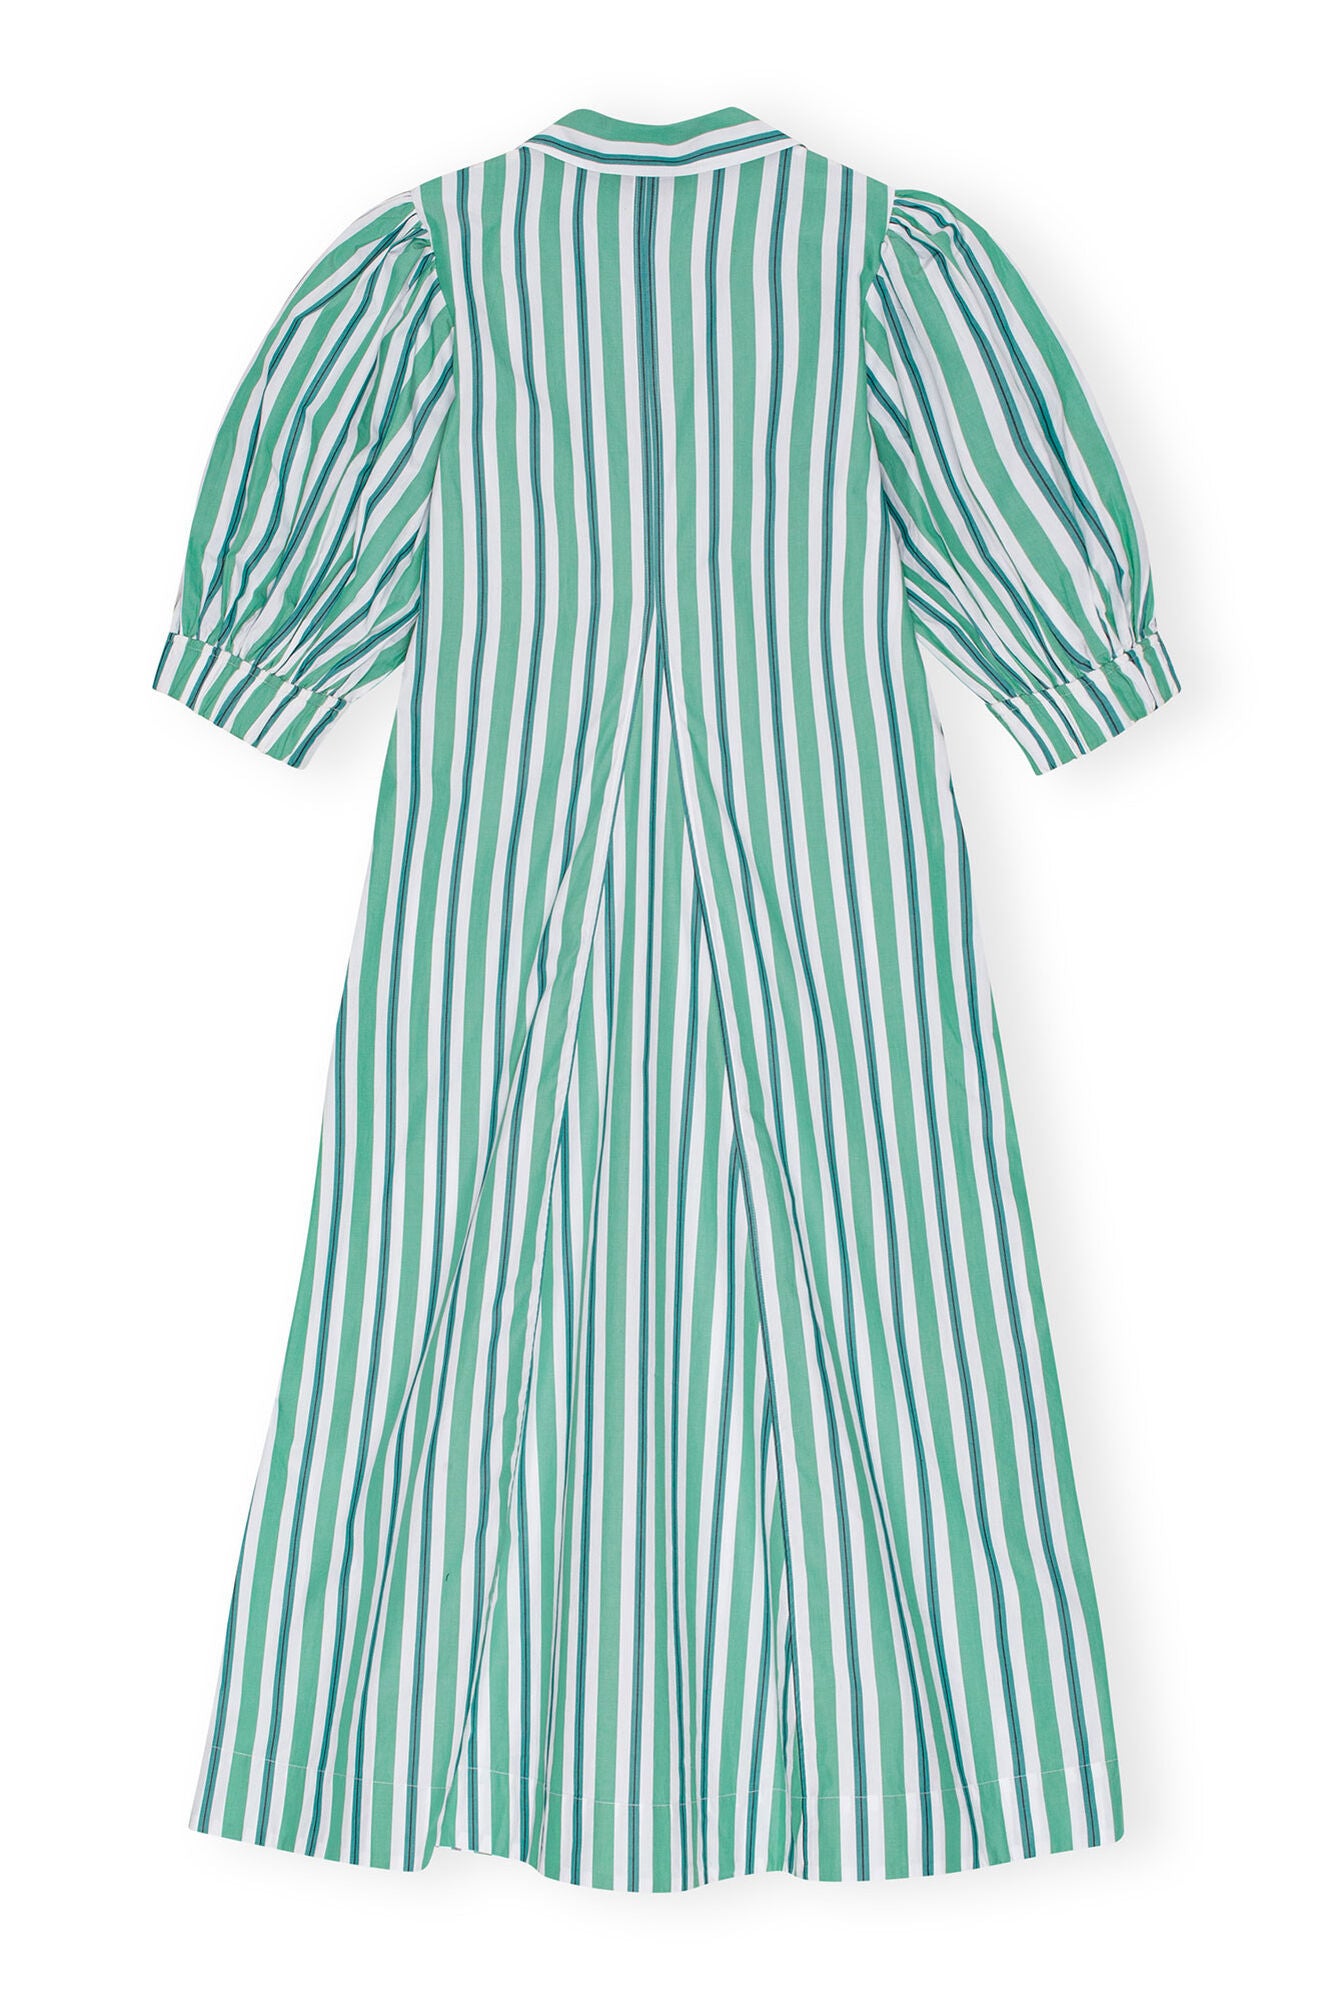 Ganni Stripe Cotton Collar Long Dress Creme De Menthe - hvittrad.no